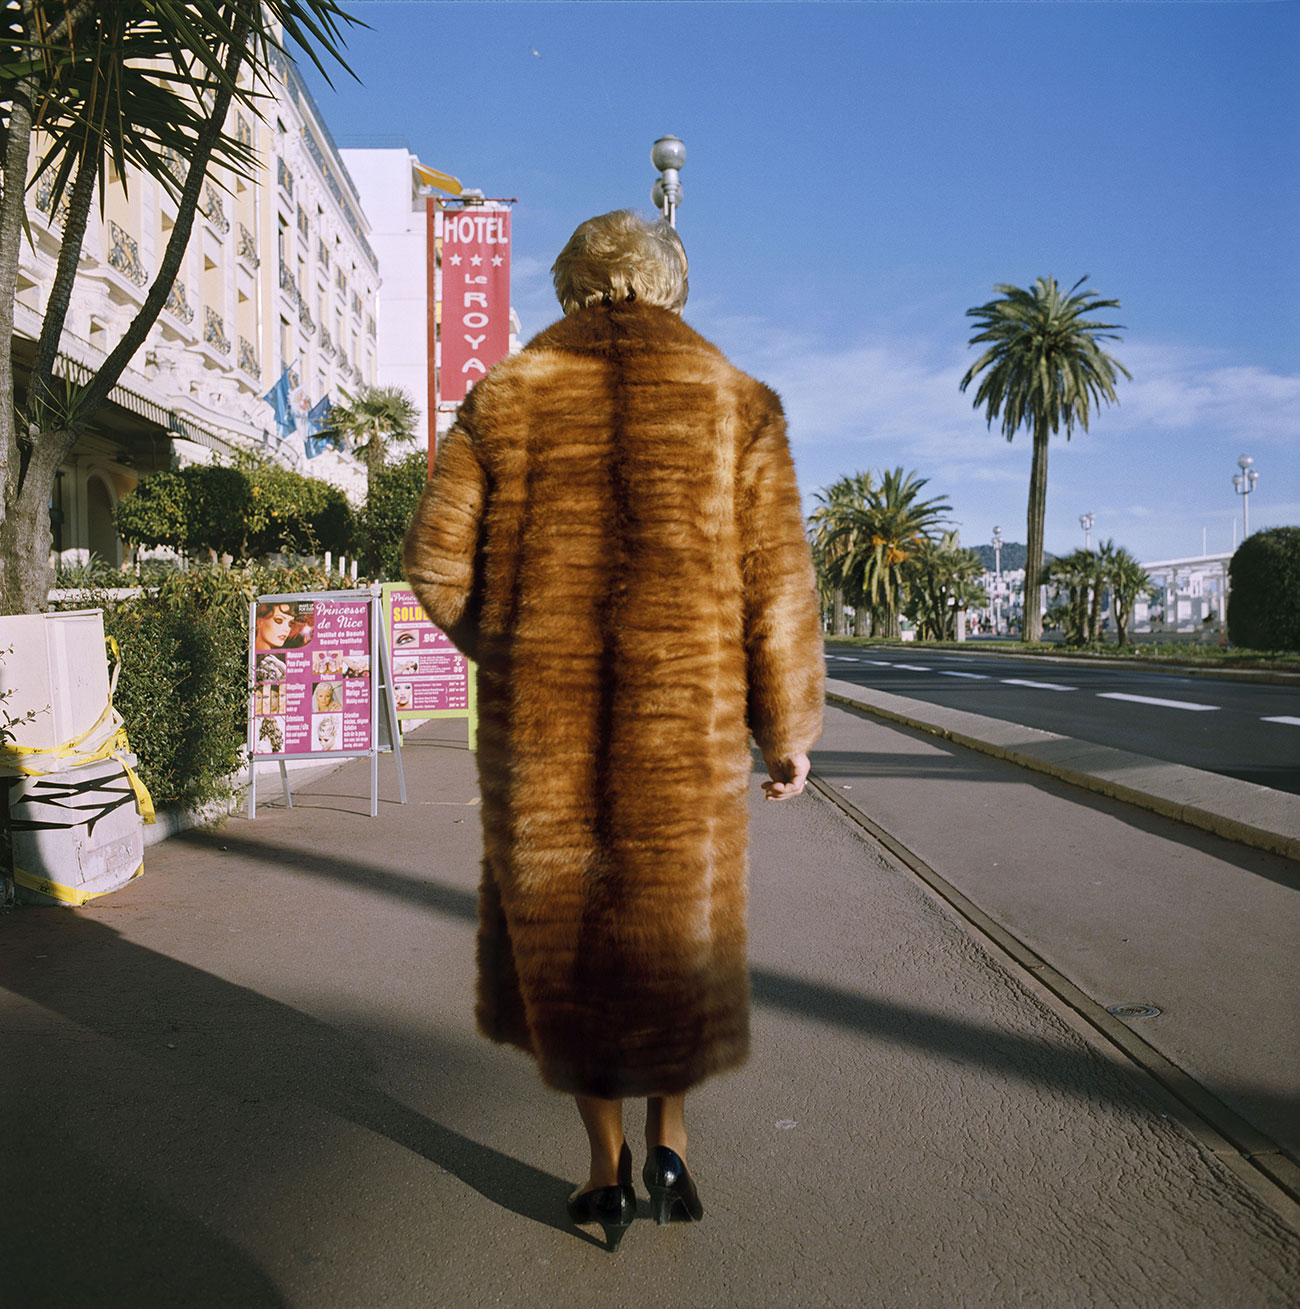 Promenade des anglais, Nice, 2012 © Raymond Depardon, Magnum photos